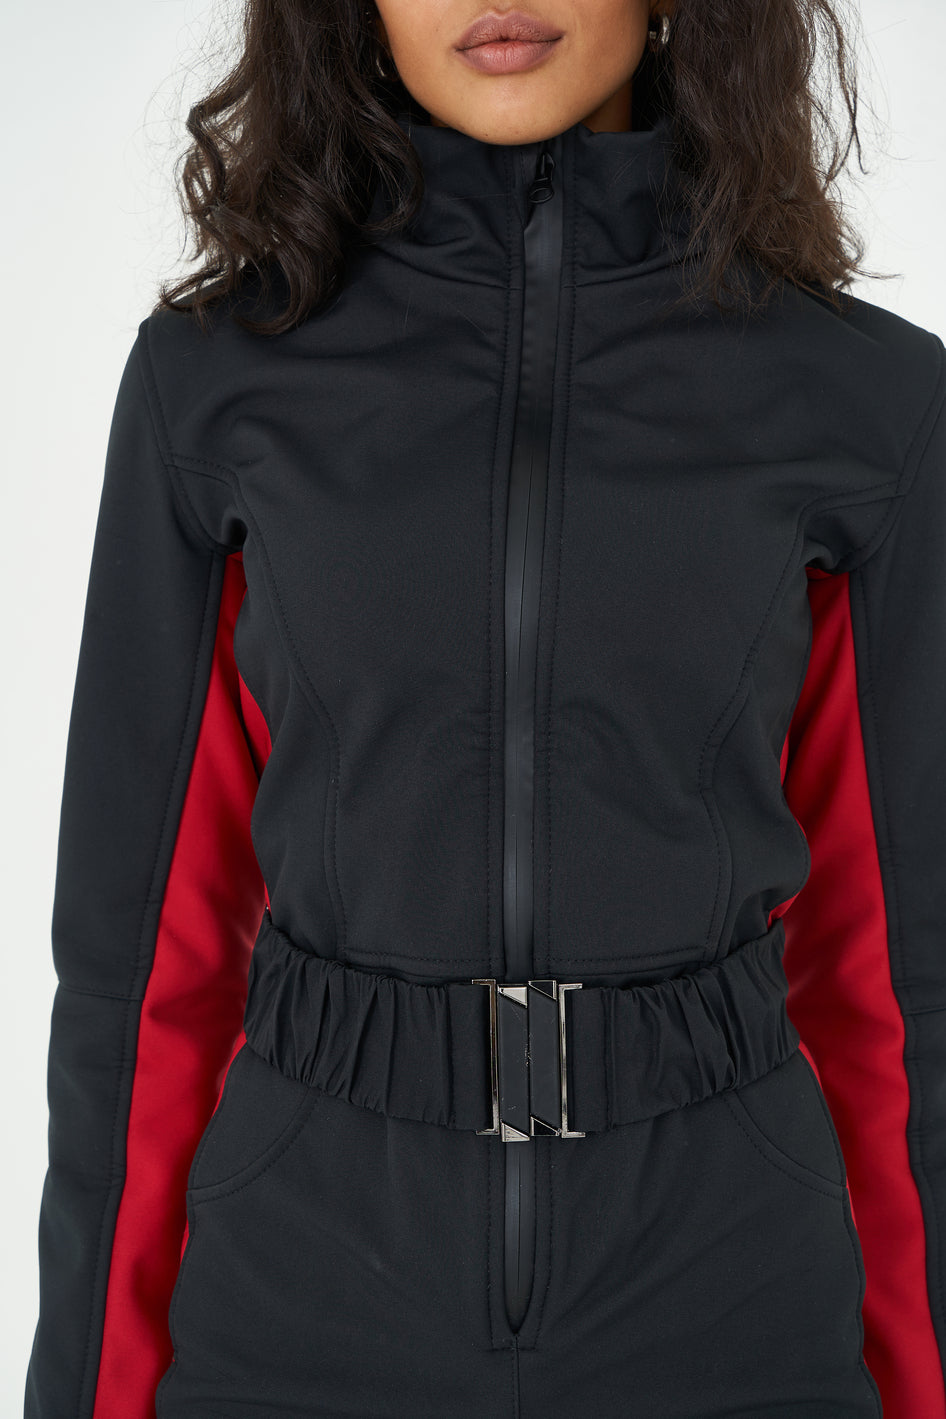 Ski suit slim fit REMBRA - Black with red stripes skinny ski jumpsuit for woman